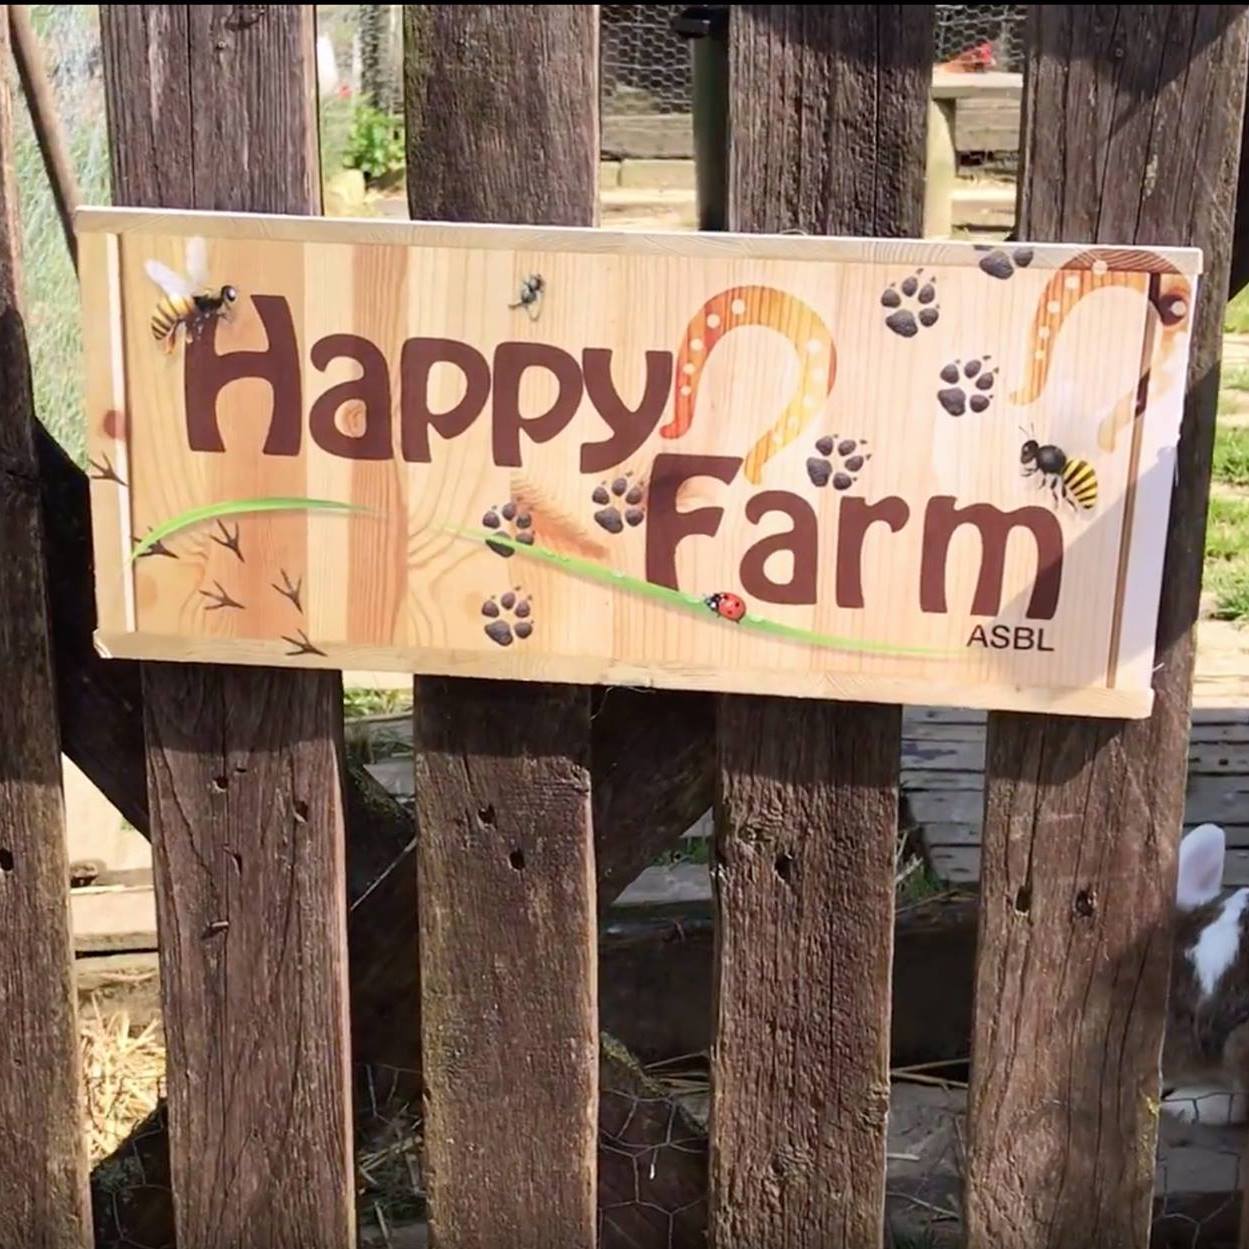 Happyfarm